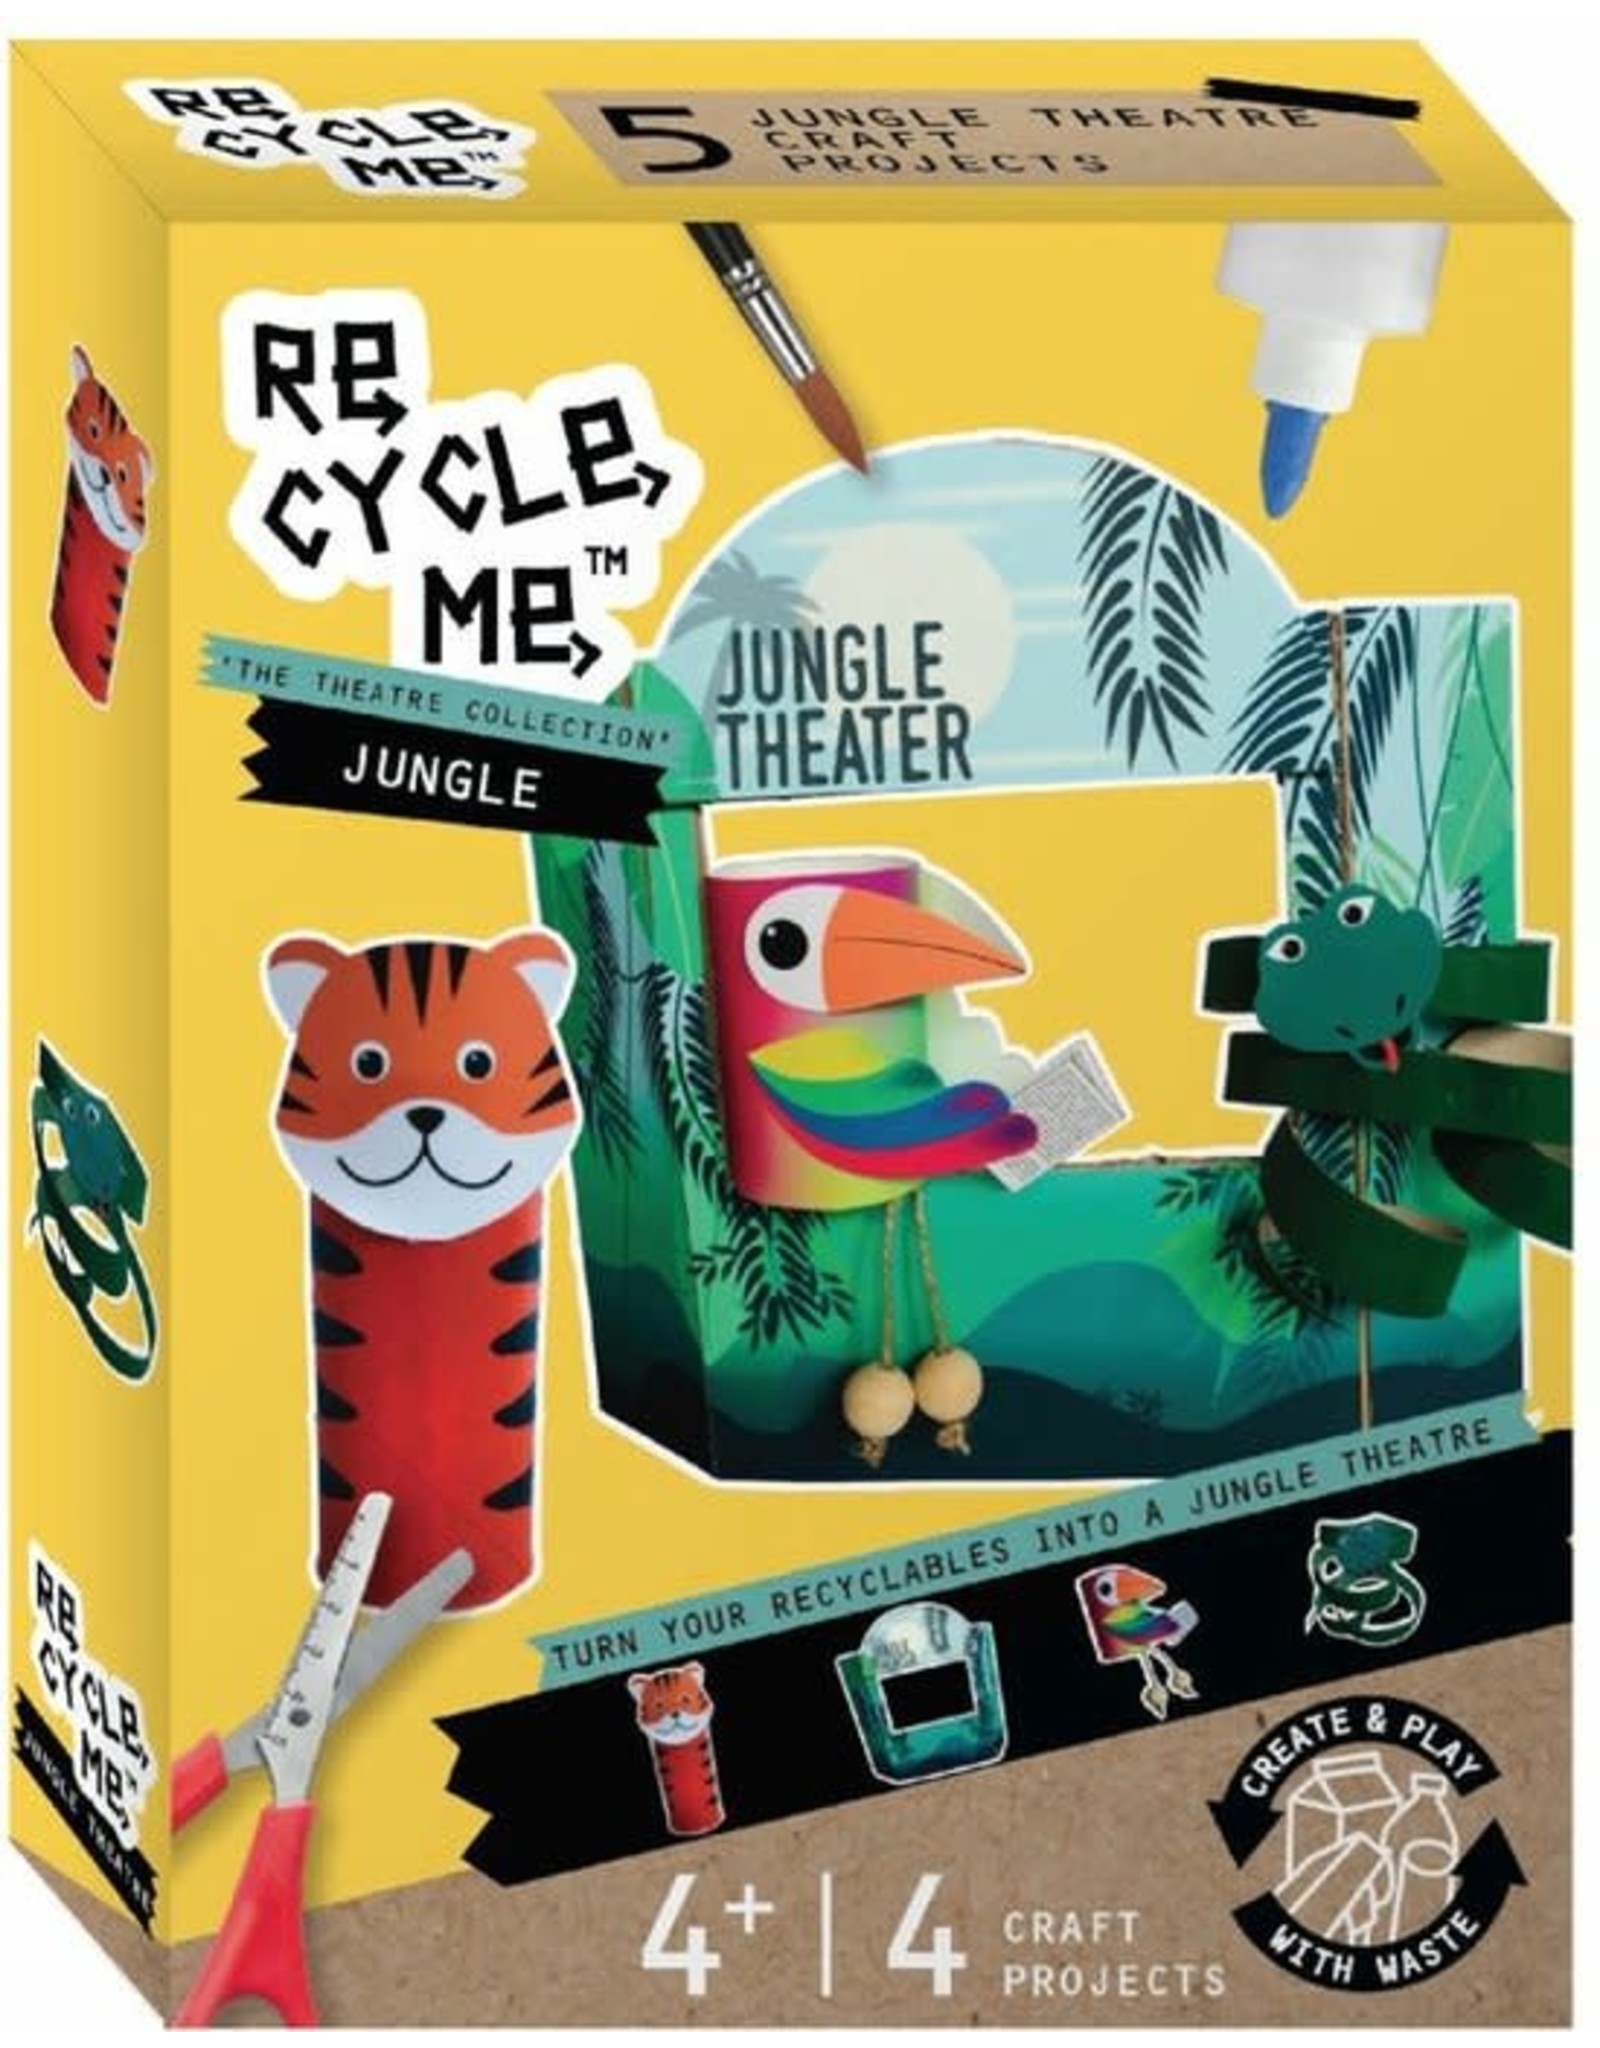 ReCycleMe Jungle Theatre